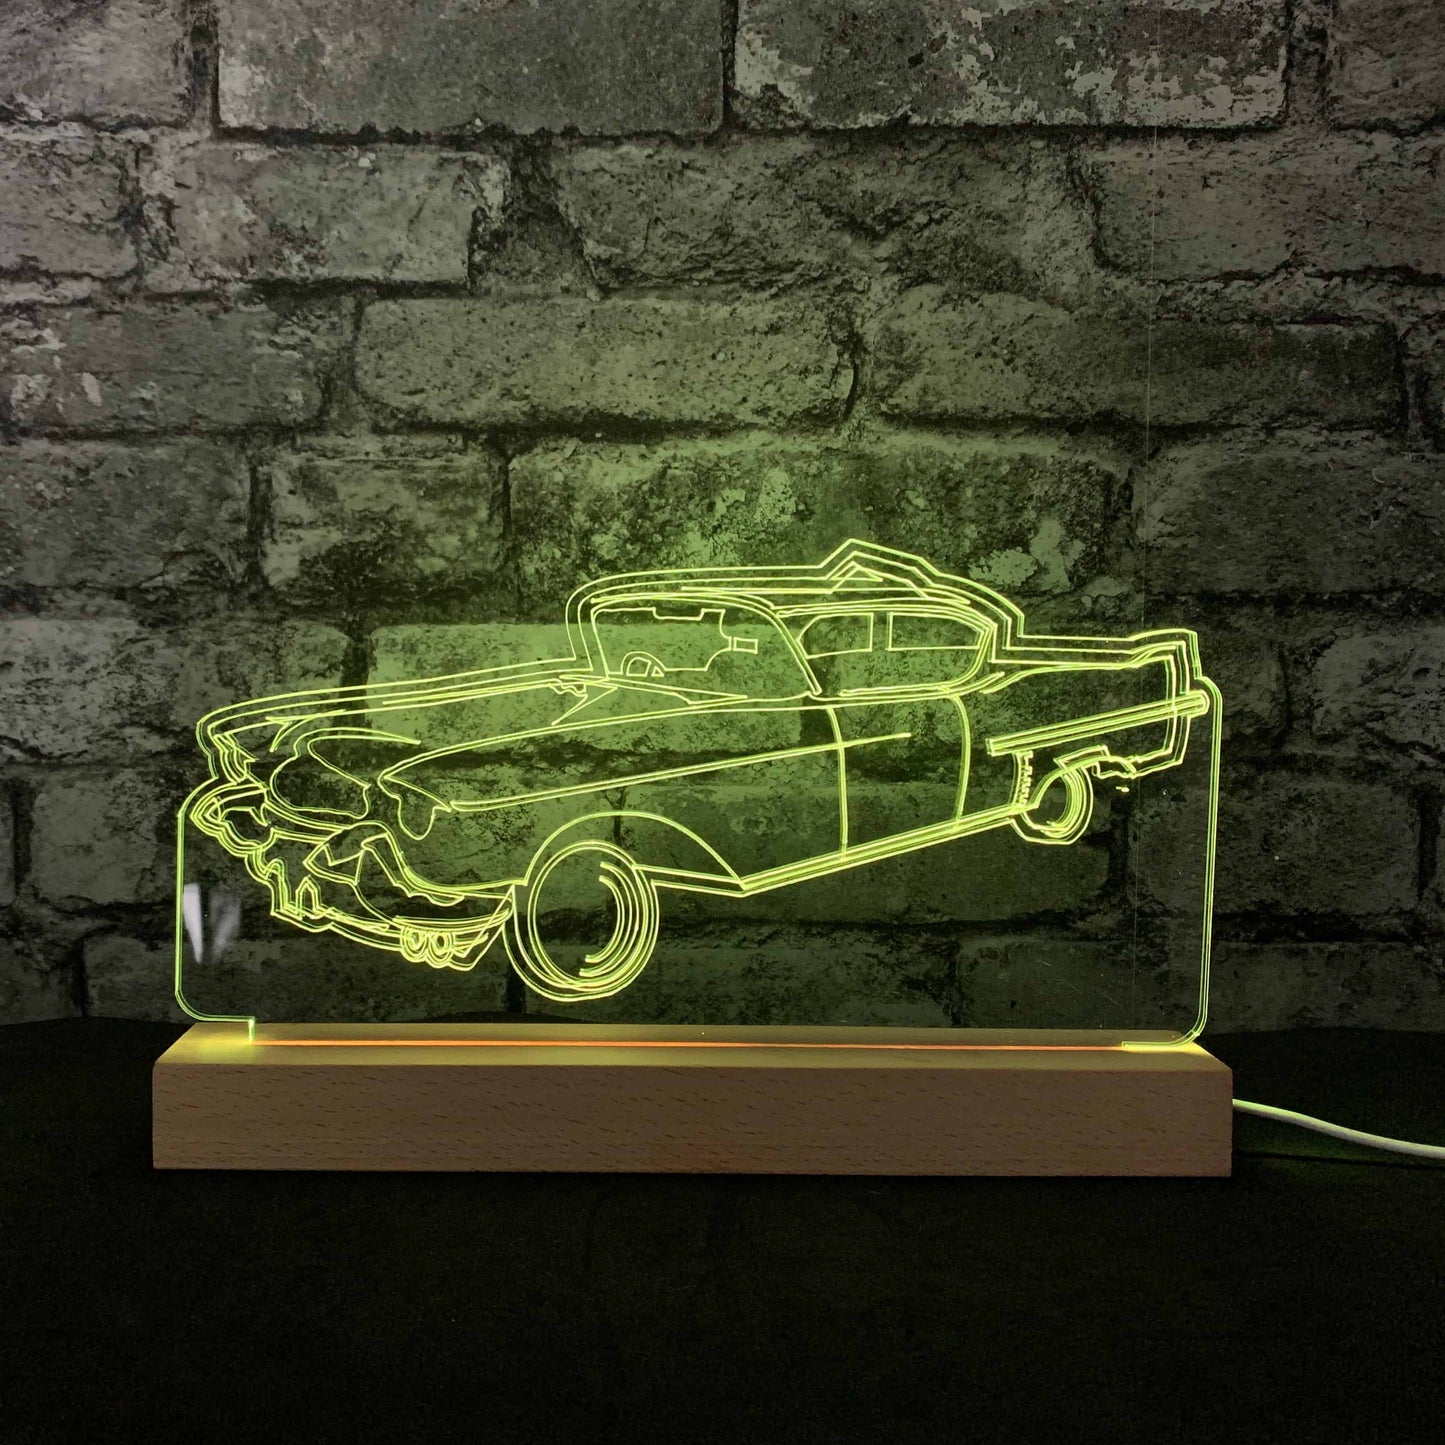 Yank Banger Night Light - Large Wooden Base - Night Lights & Ambient Lighting - Stock Car & Banger Toy Tracks